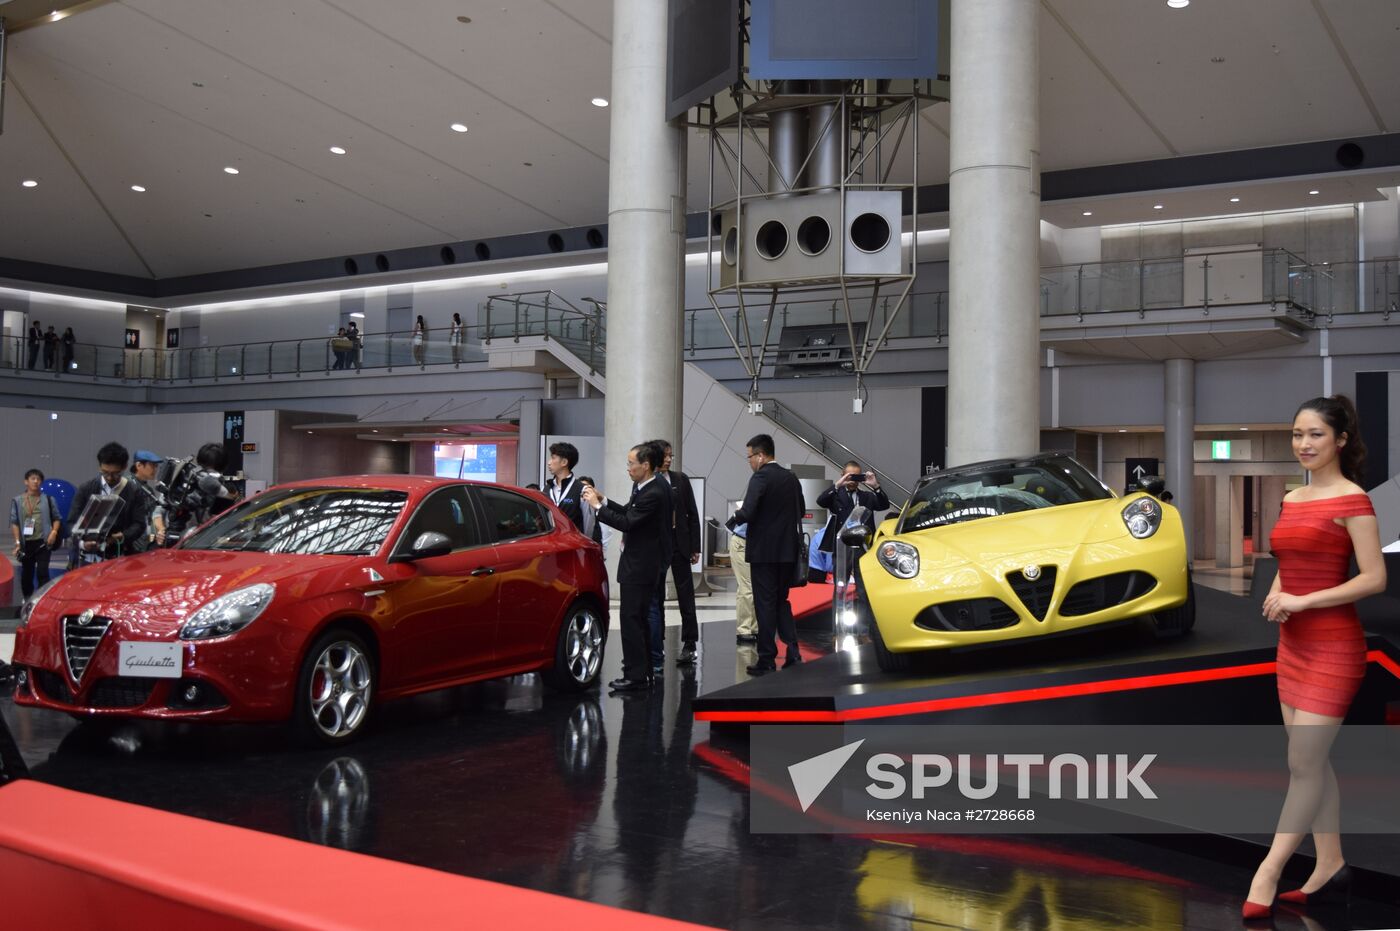 Tokyo Motor Show 2015